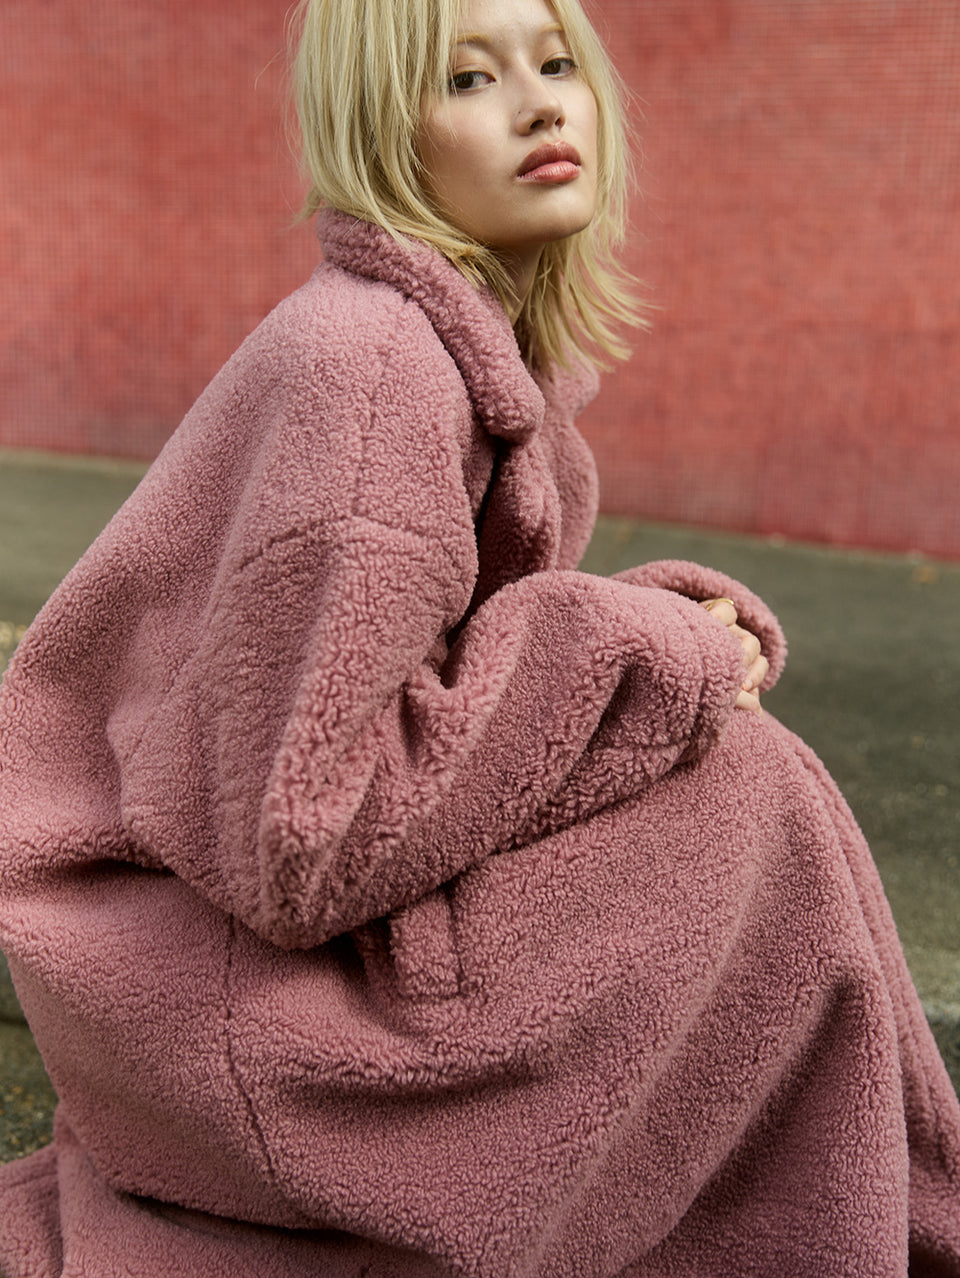 Clara Coat KIVARI | Model wears pink fluffy coat campaign